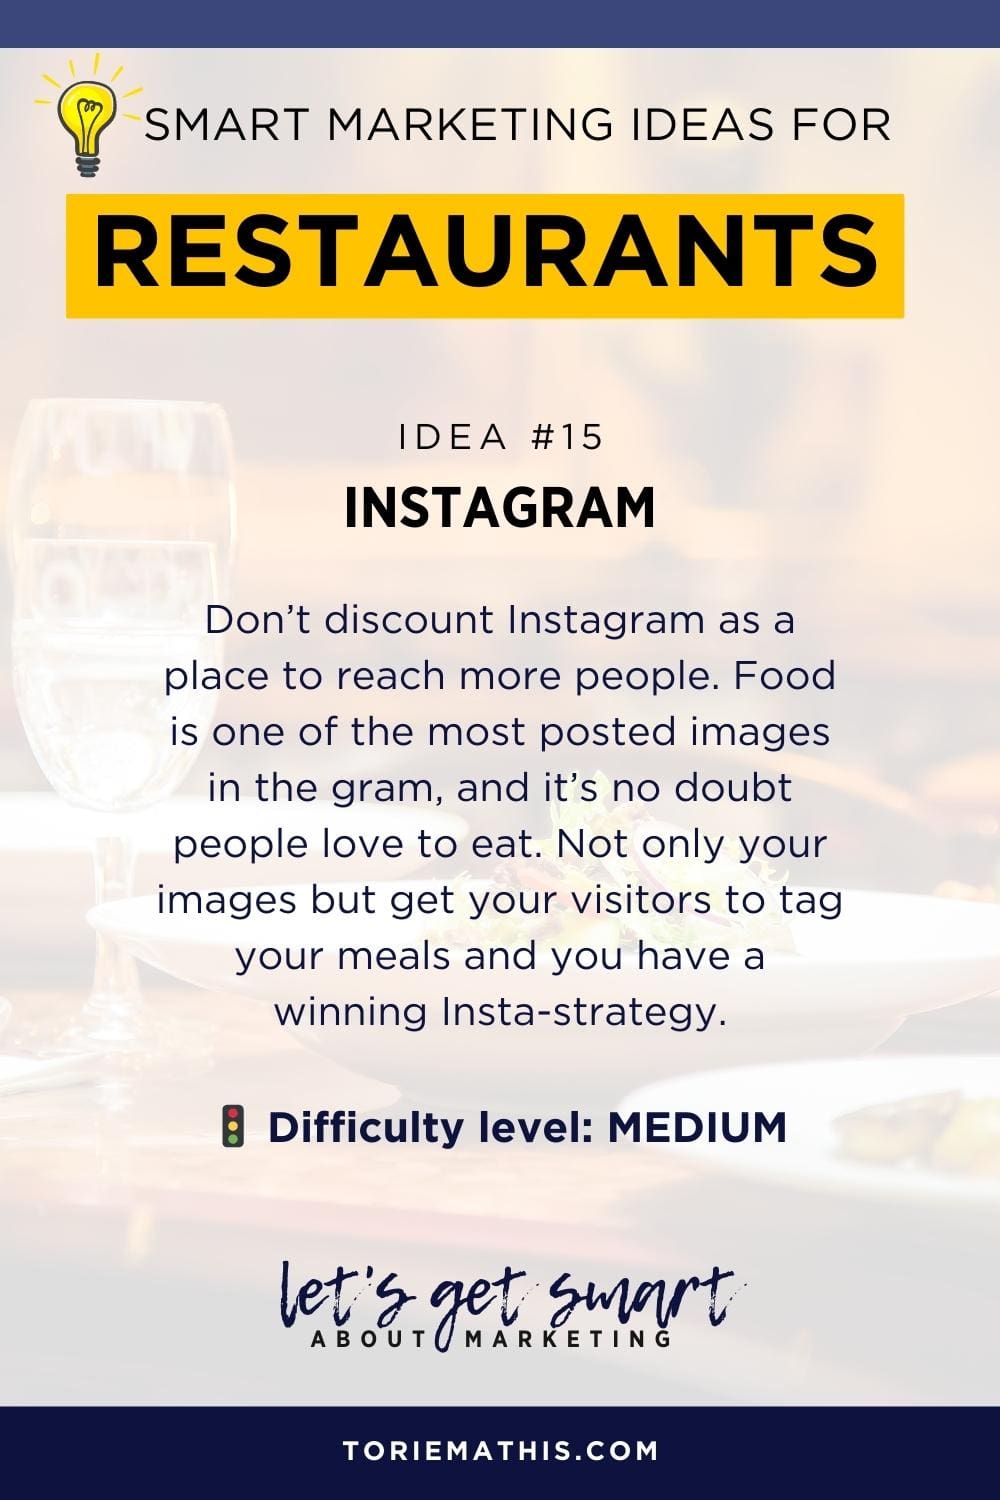 45+ Restaurant Marketing Ideas